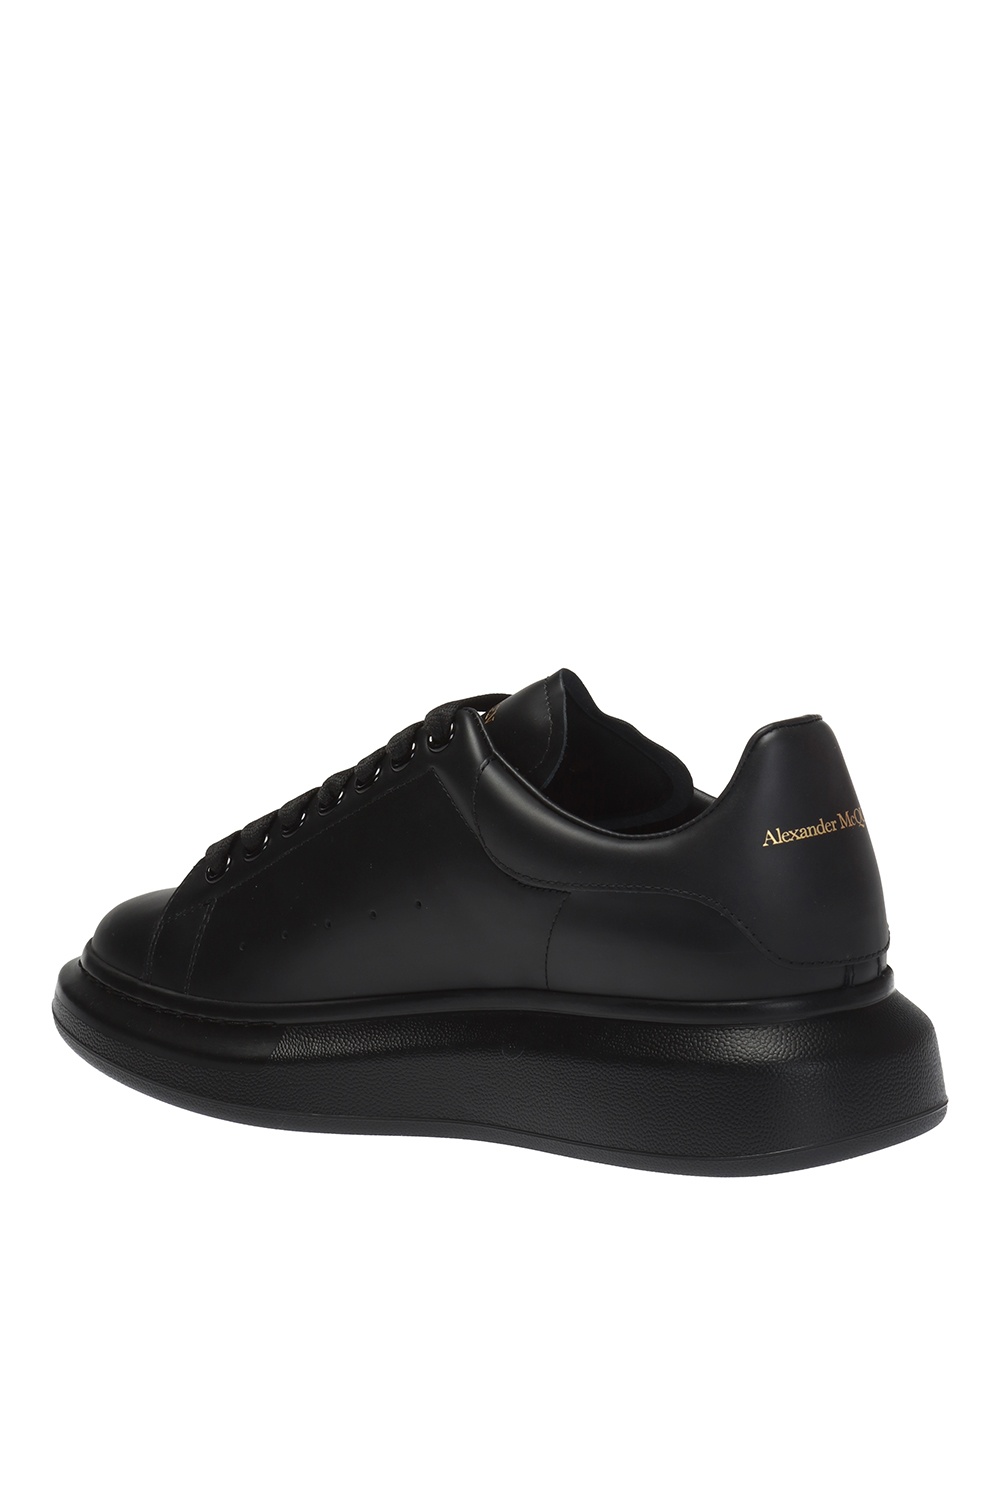 All Black Alexander McQueen Sneakers in Lagos Island (Eko) - Shoes